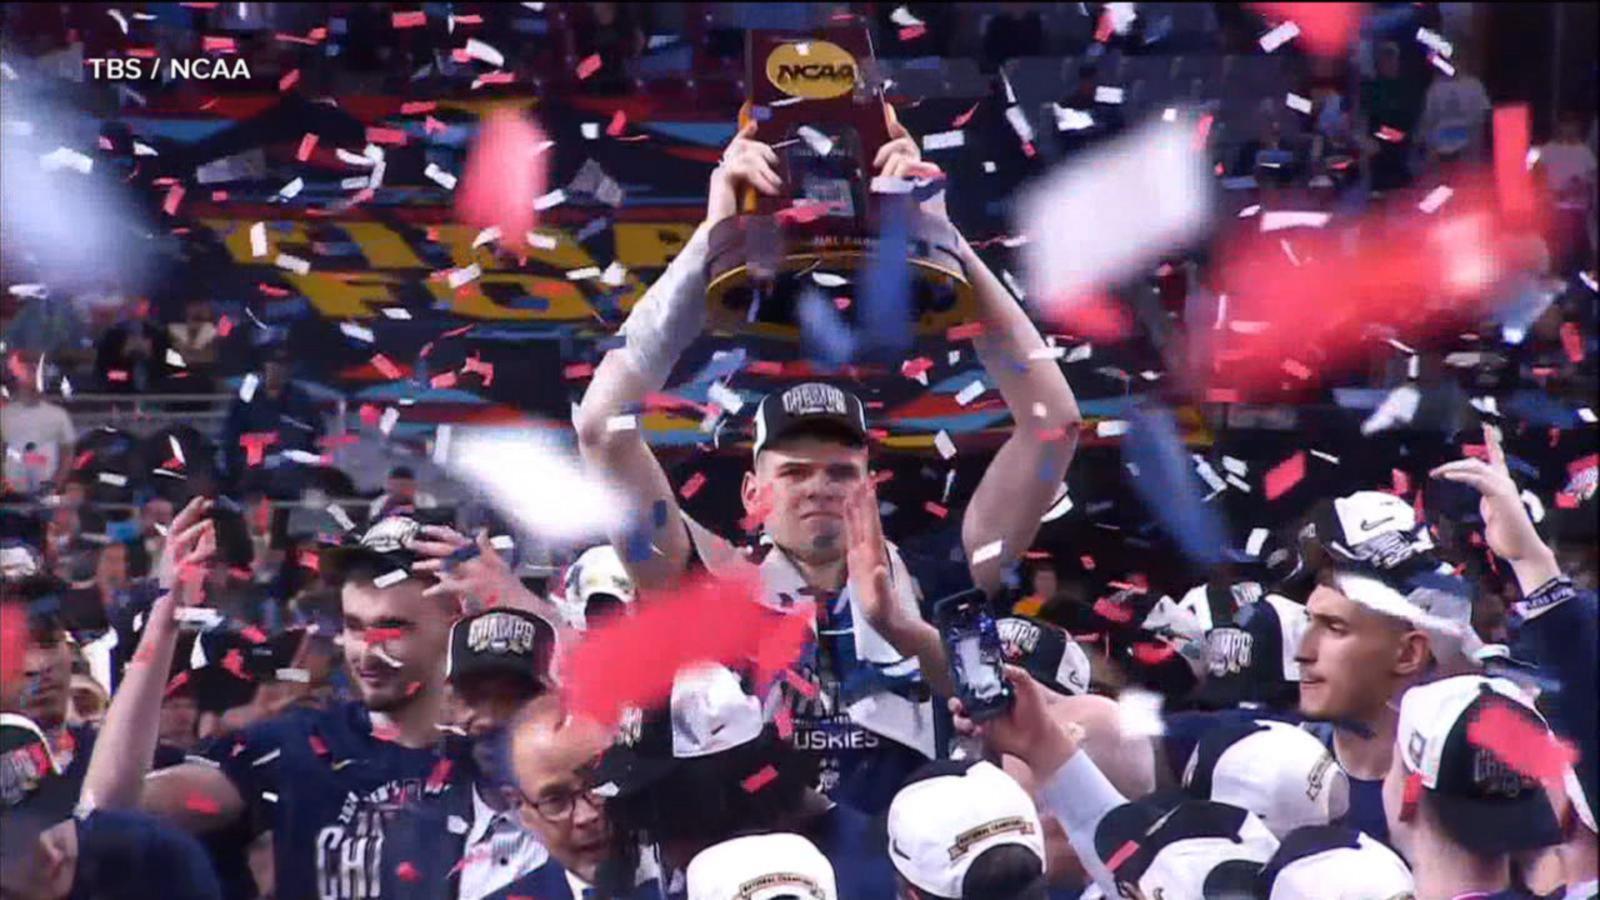 VIDEO: UConn beats Purdue to win NCAA championship